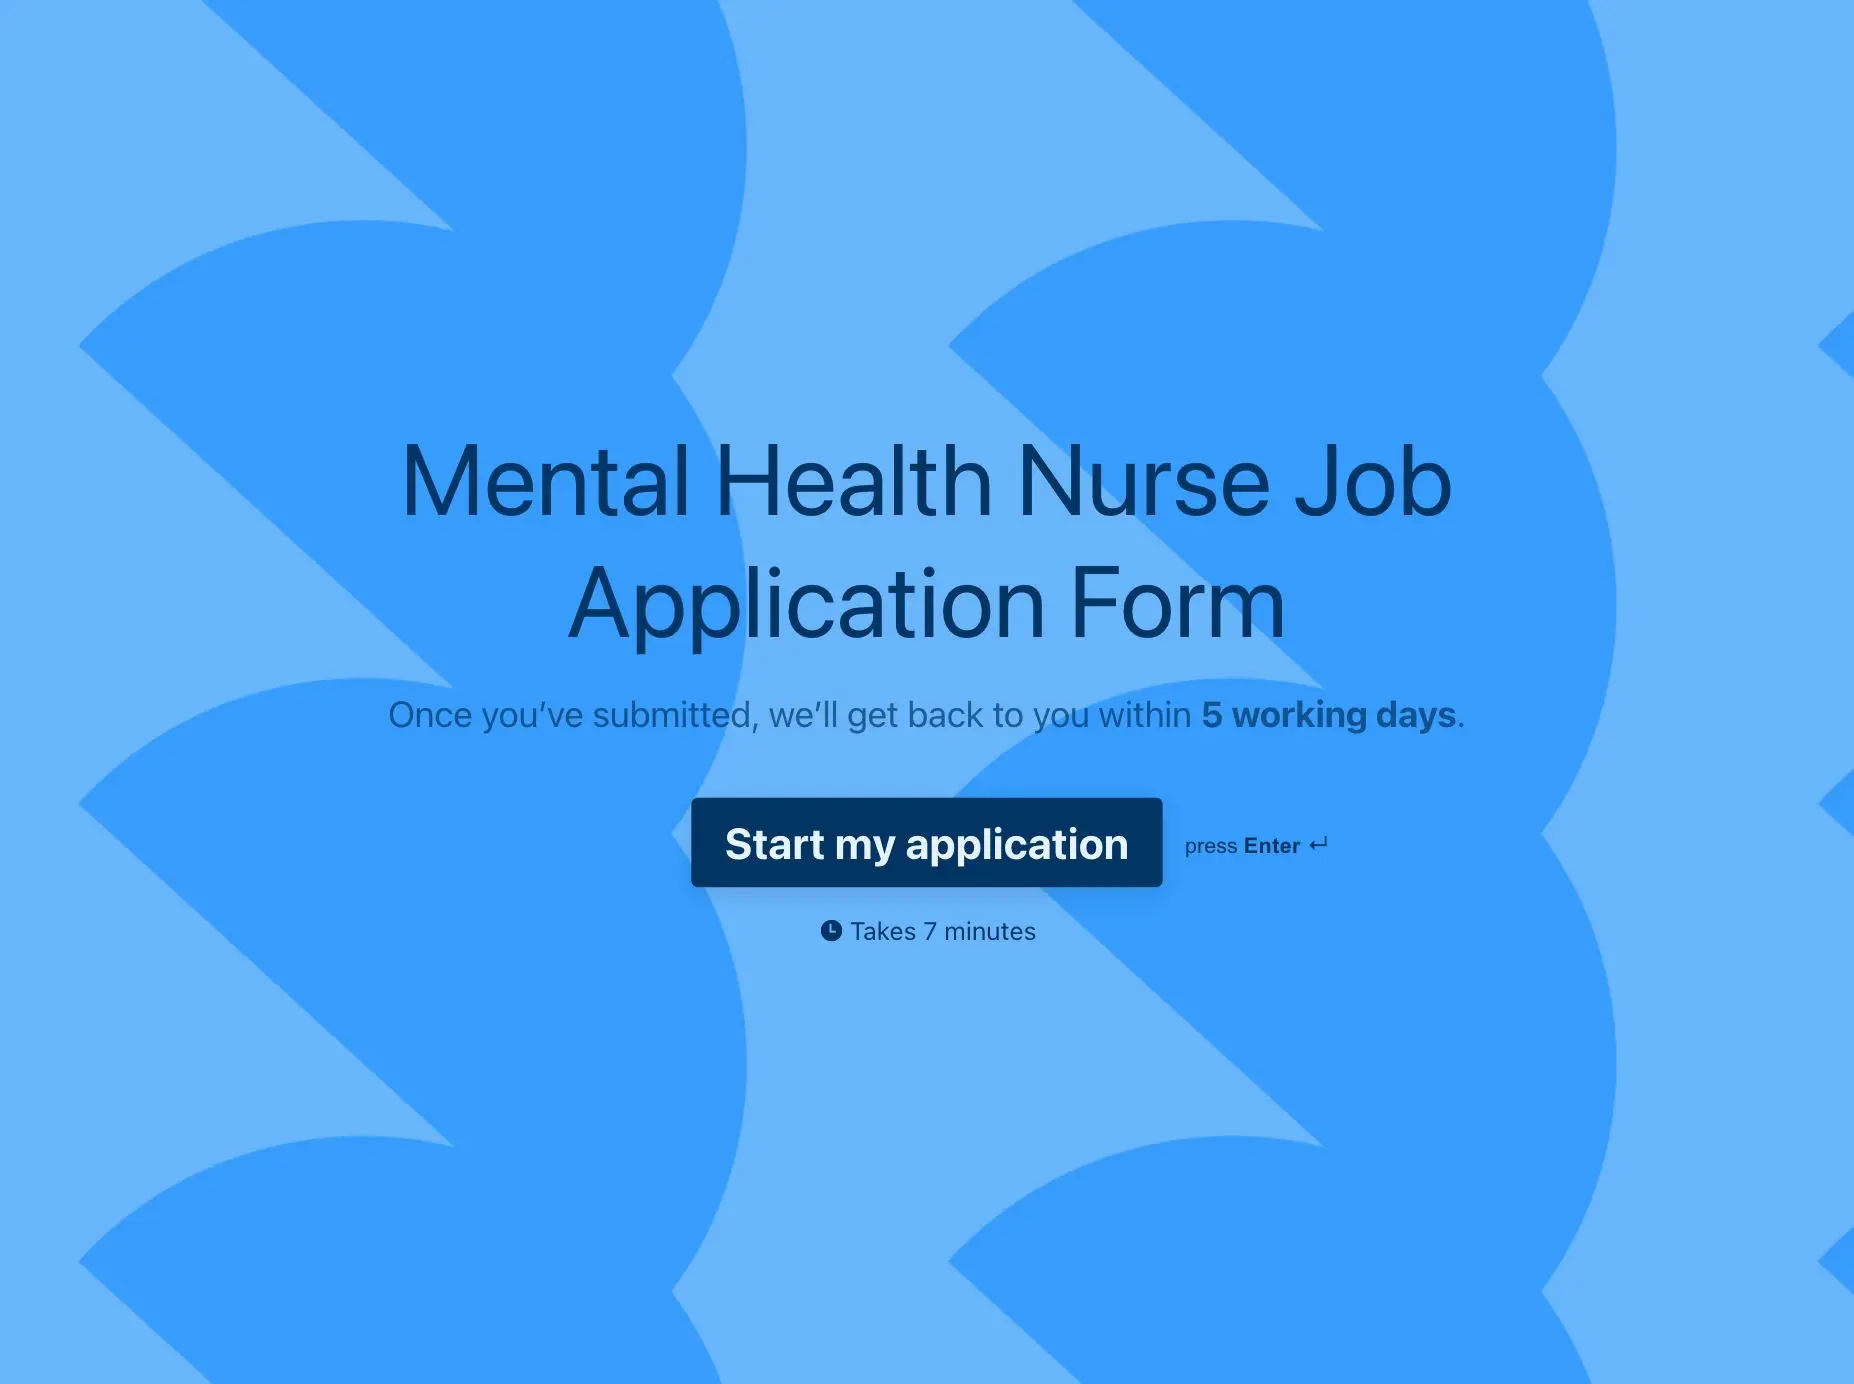 Mental Health Nurse Job Application Form Template Hero